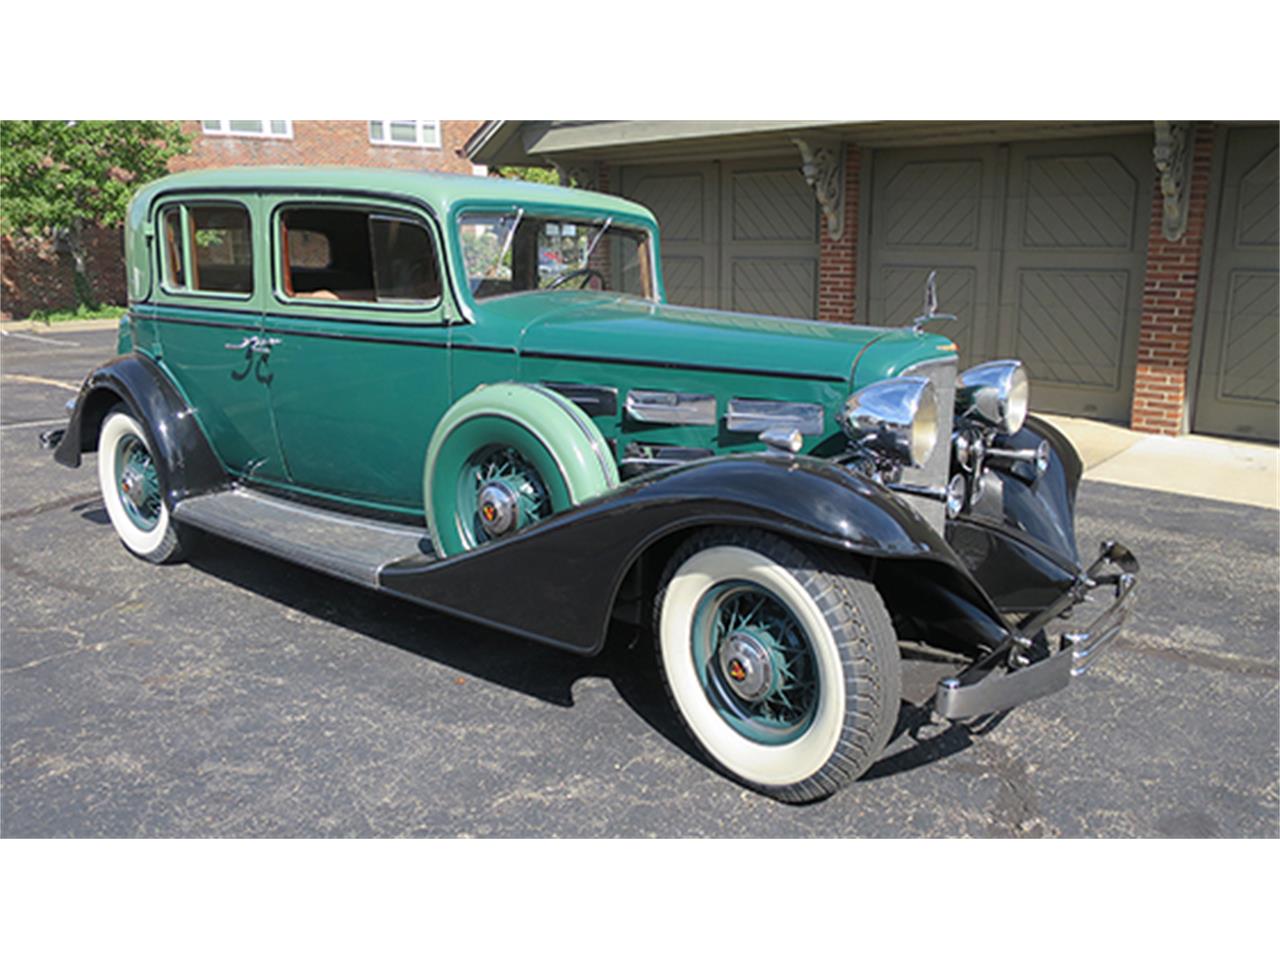 1933 cadillac 370c v 12 five passenger town sedan for sale in hilton head island south carolina